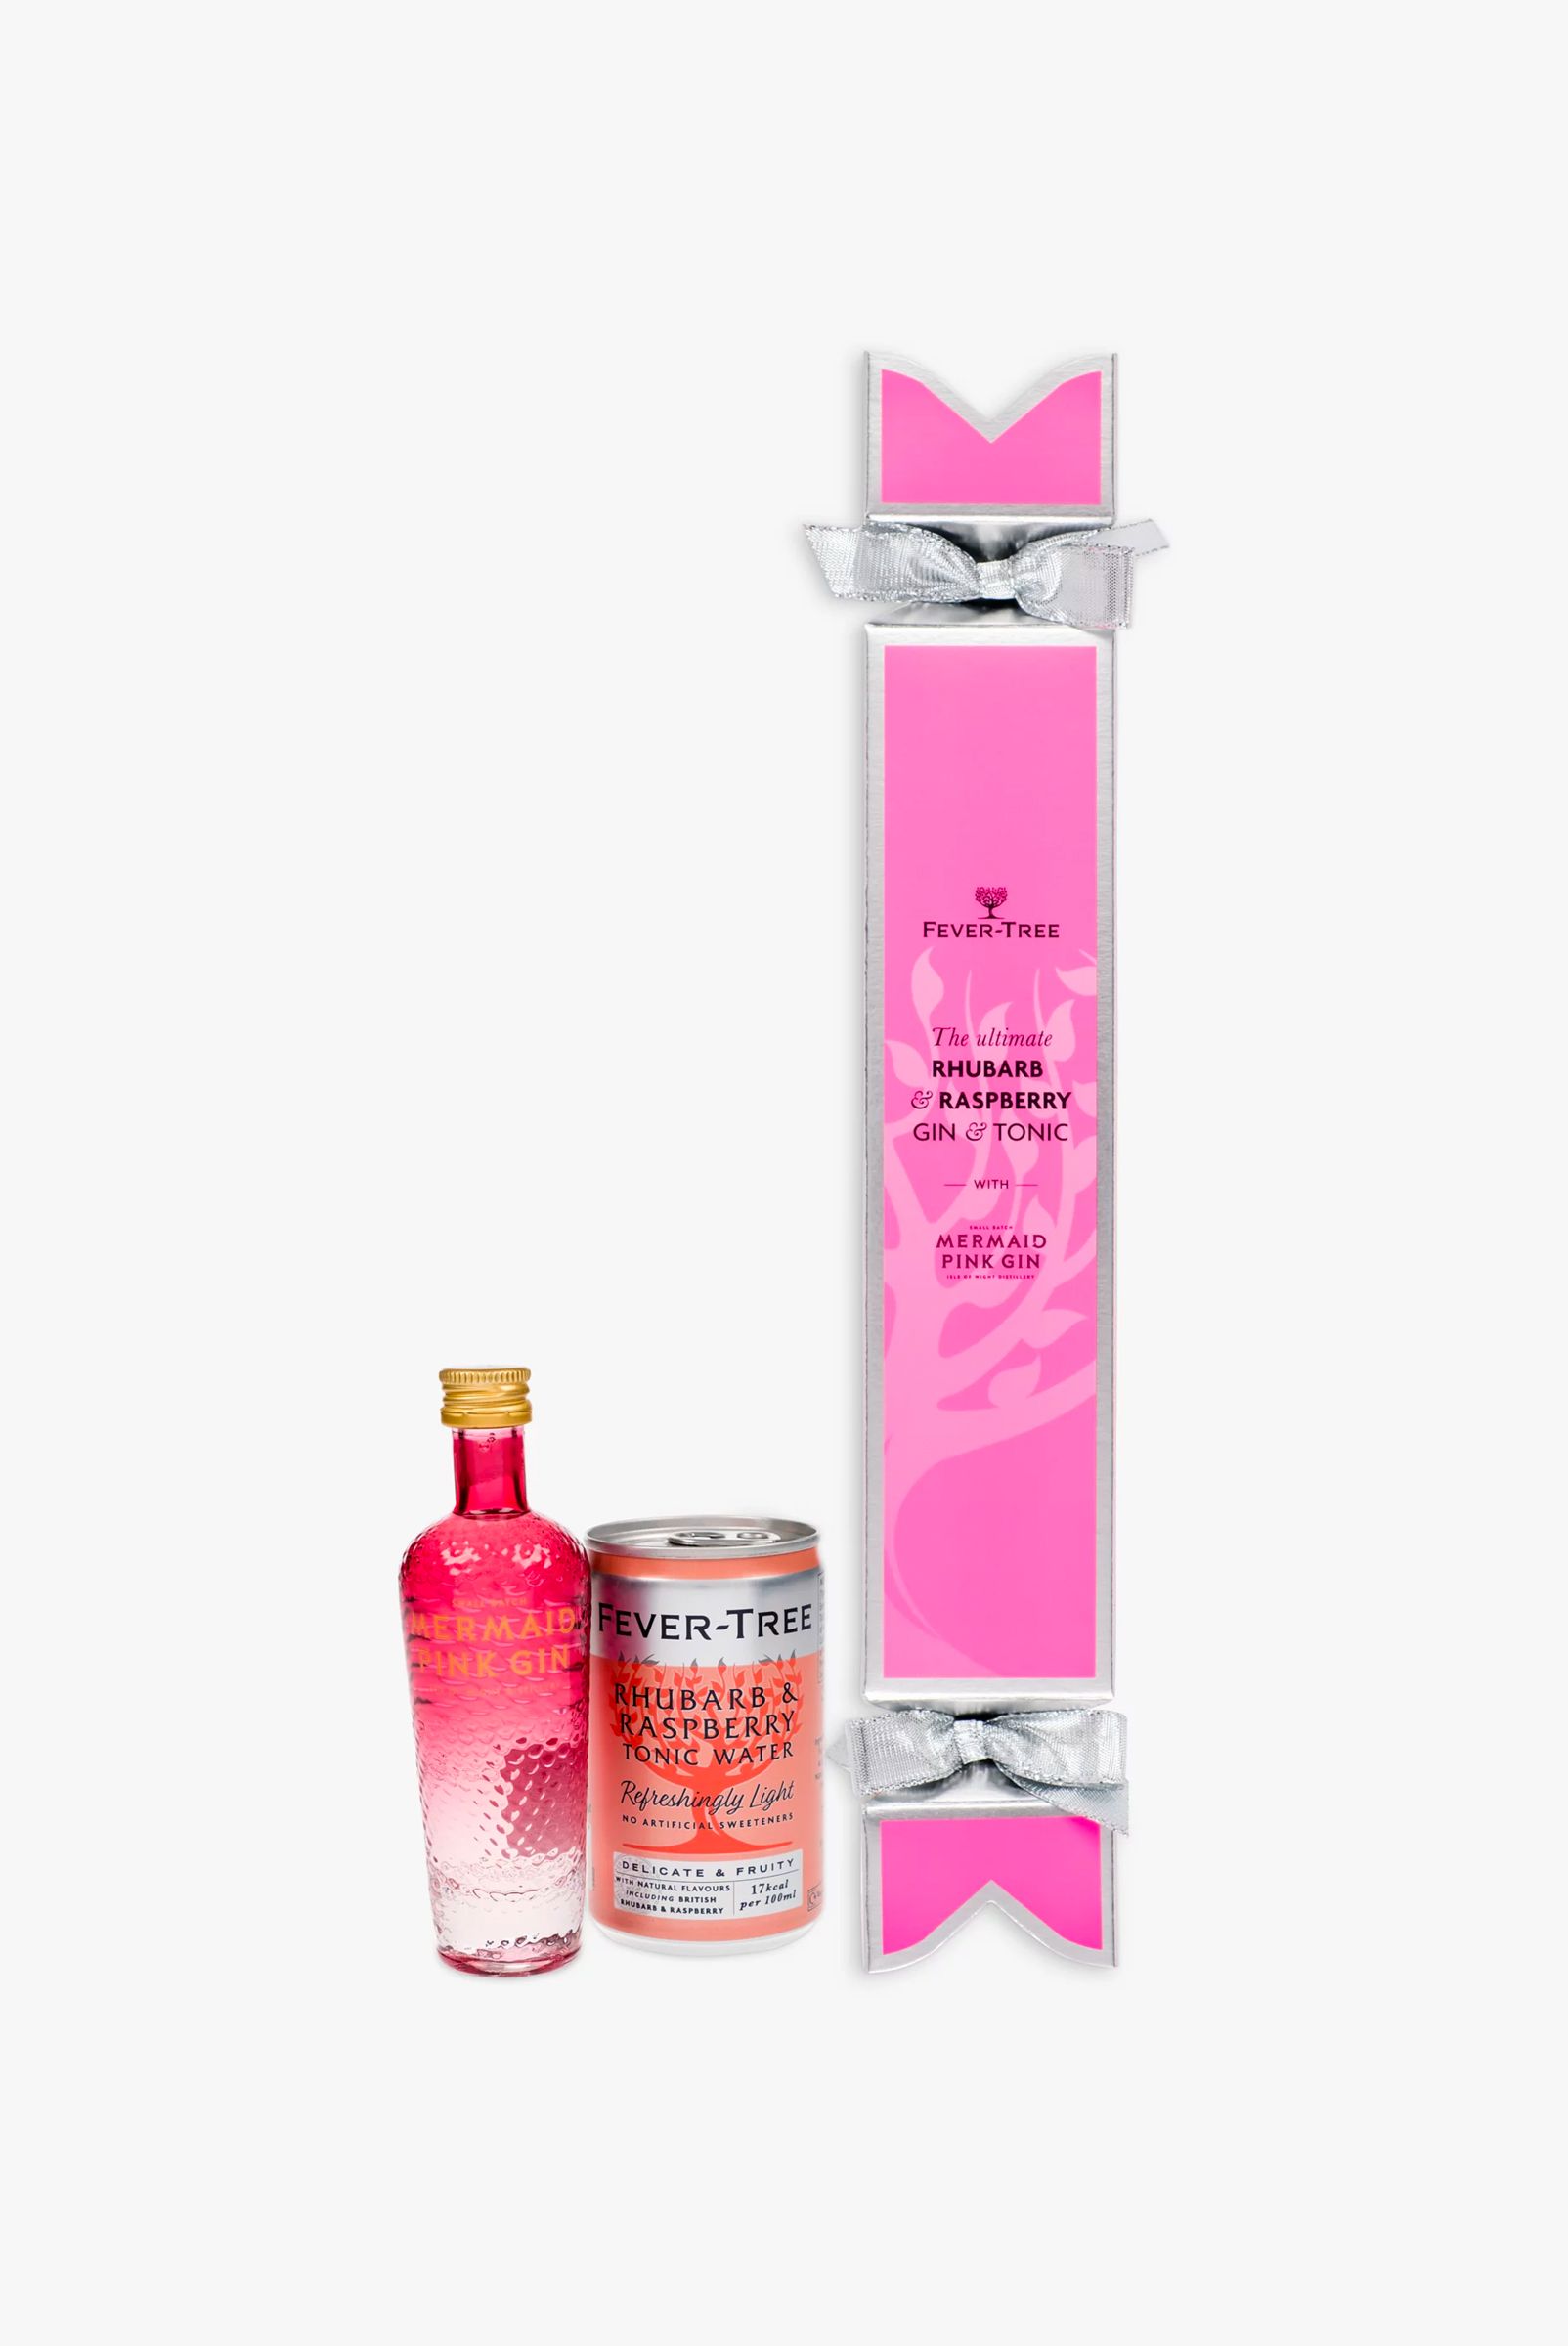 Fever-Tree The Ultimate Rhubarb & Raspberry Tonic & Mermaid Pink Gin Cracker, £8.50